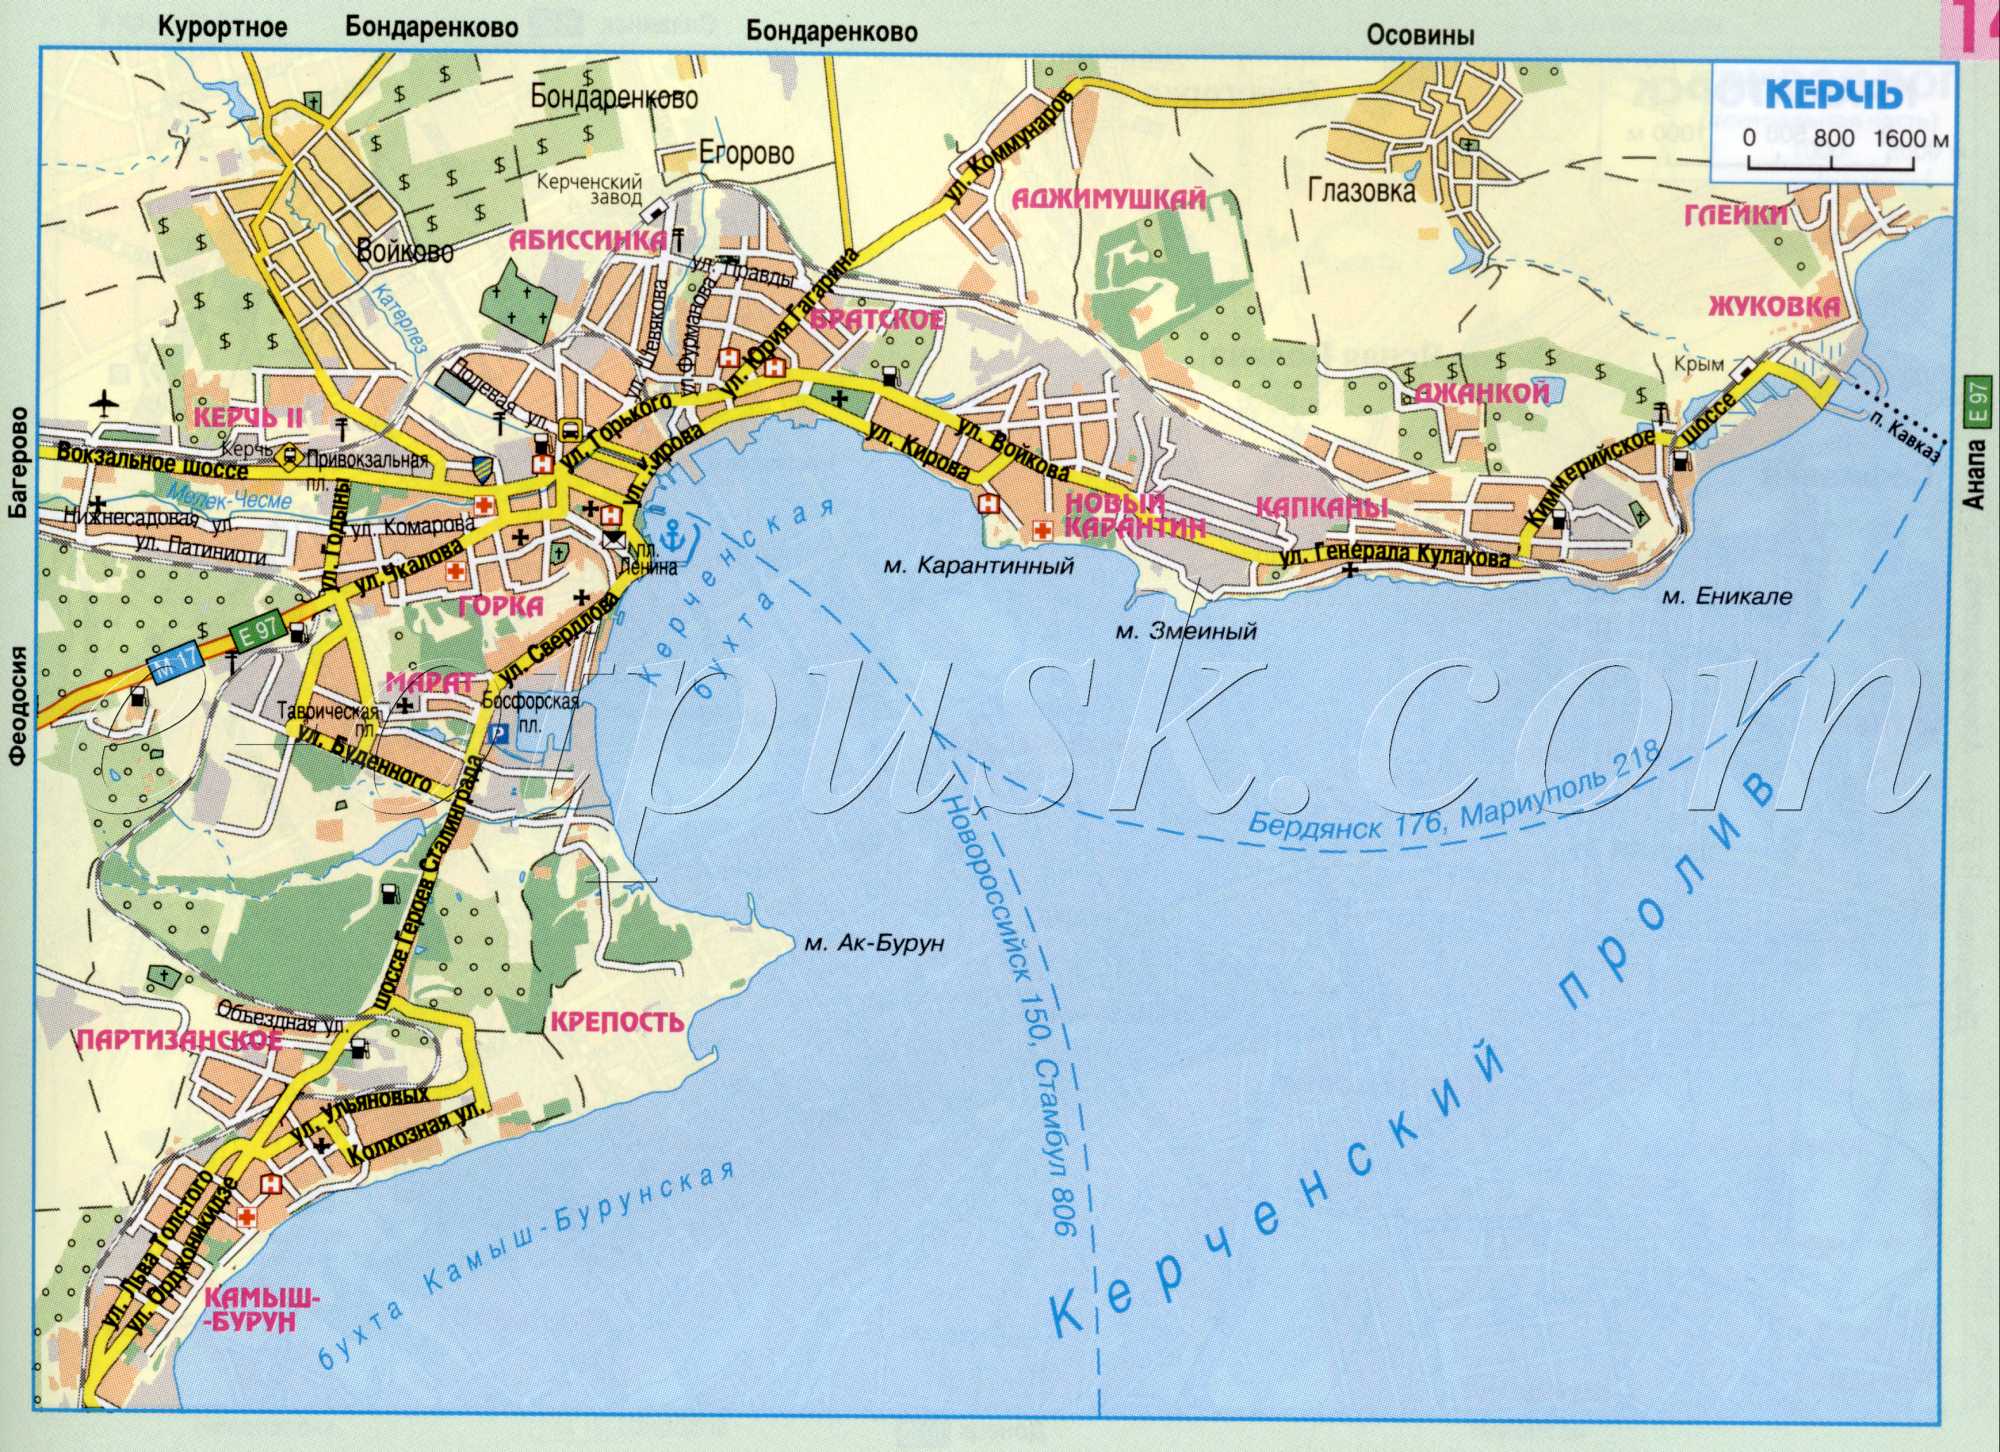 Kerch map. Autonomous Republic of Crimea, directions through the city of Kerch. download for free